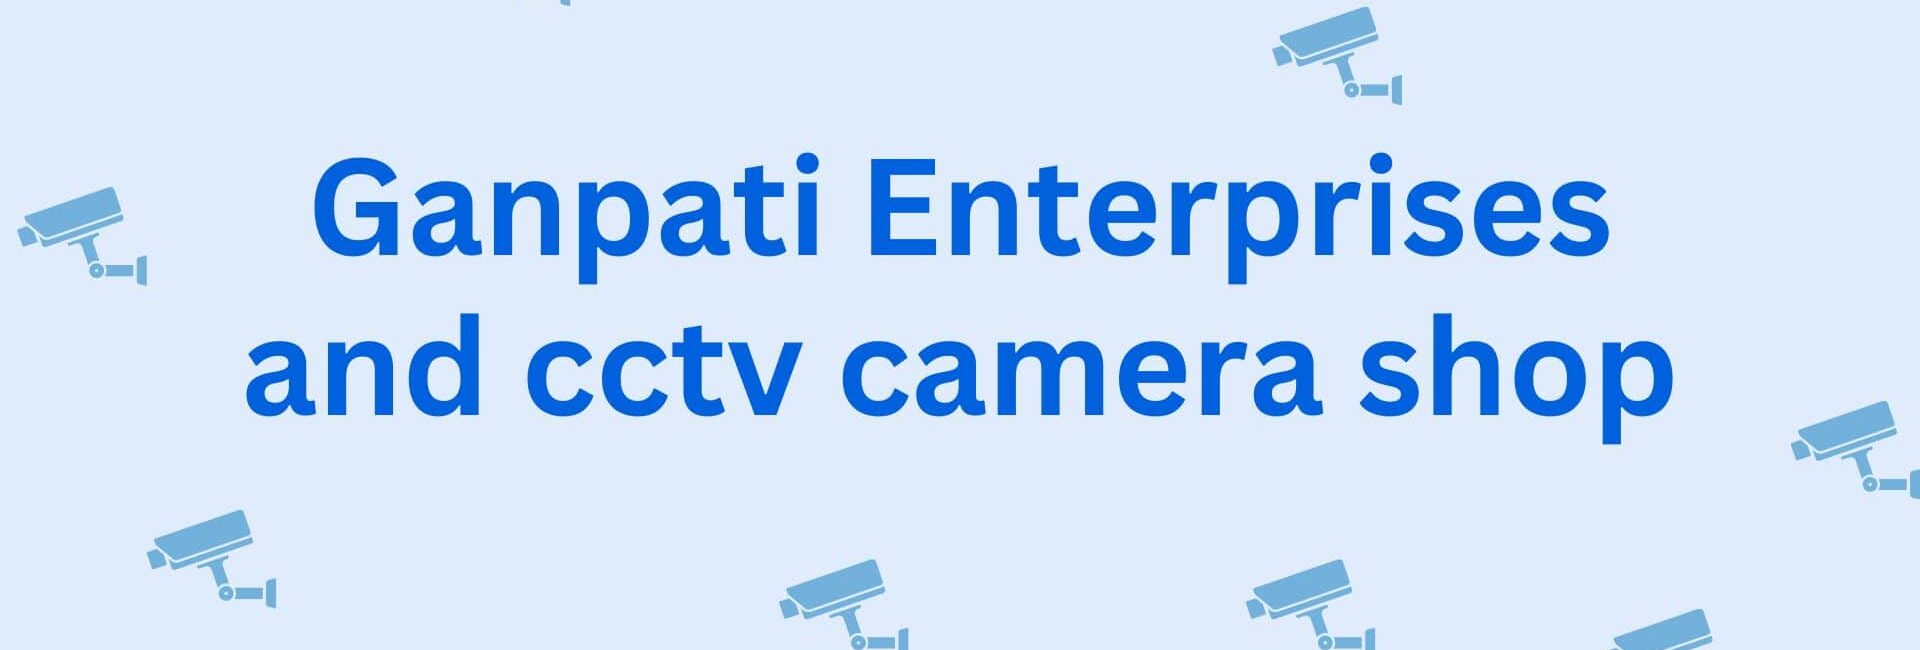 Ganpati Enterprises and cctv camera shop - Security Service in Hisar